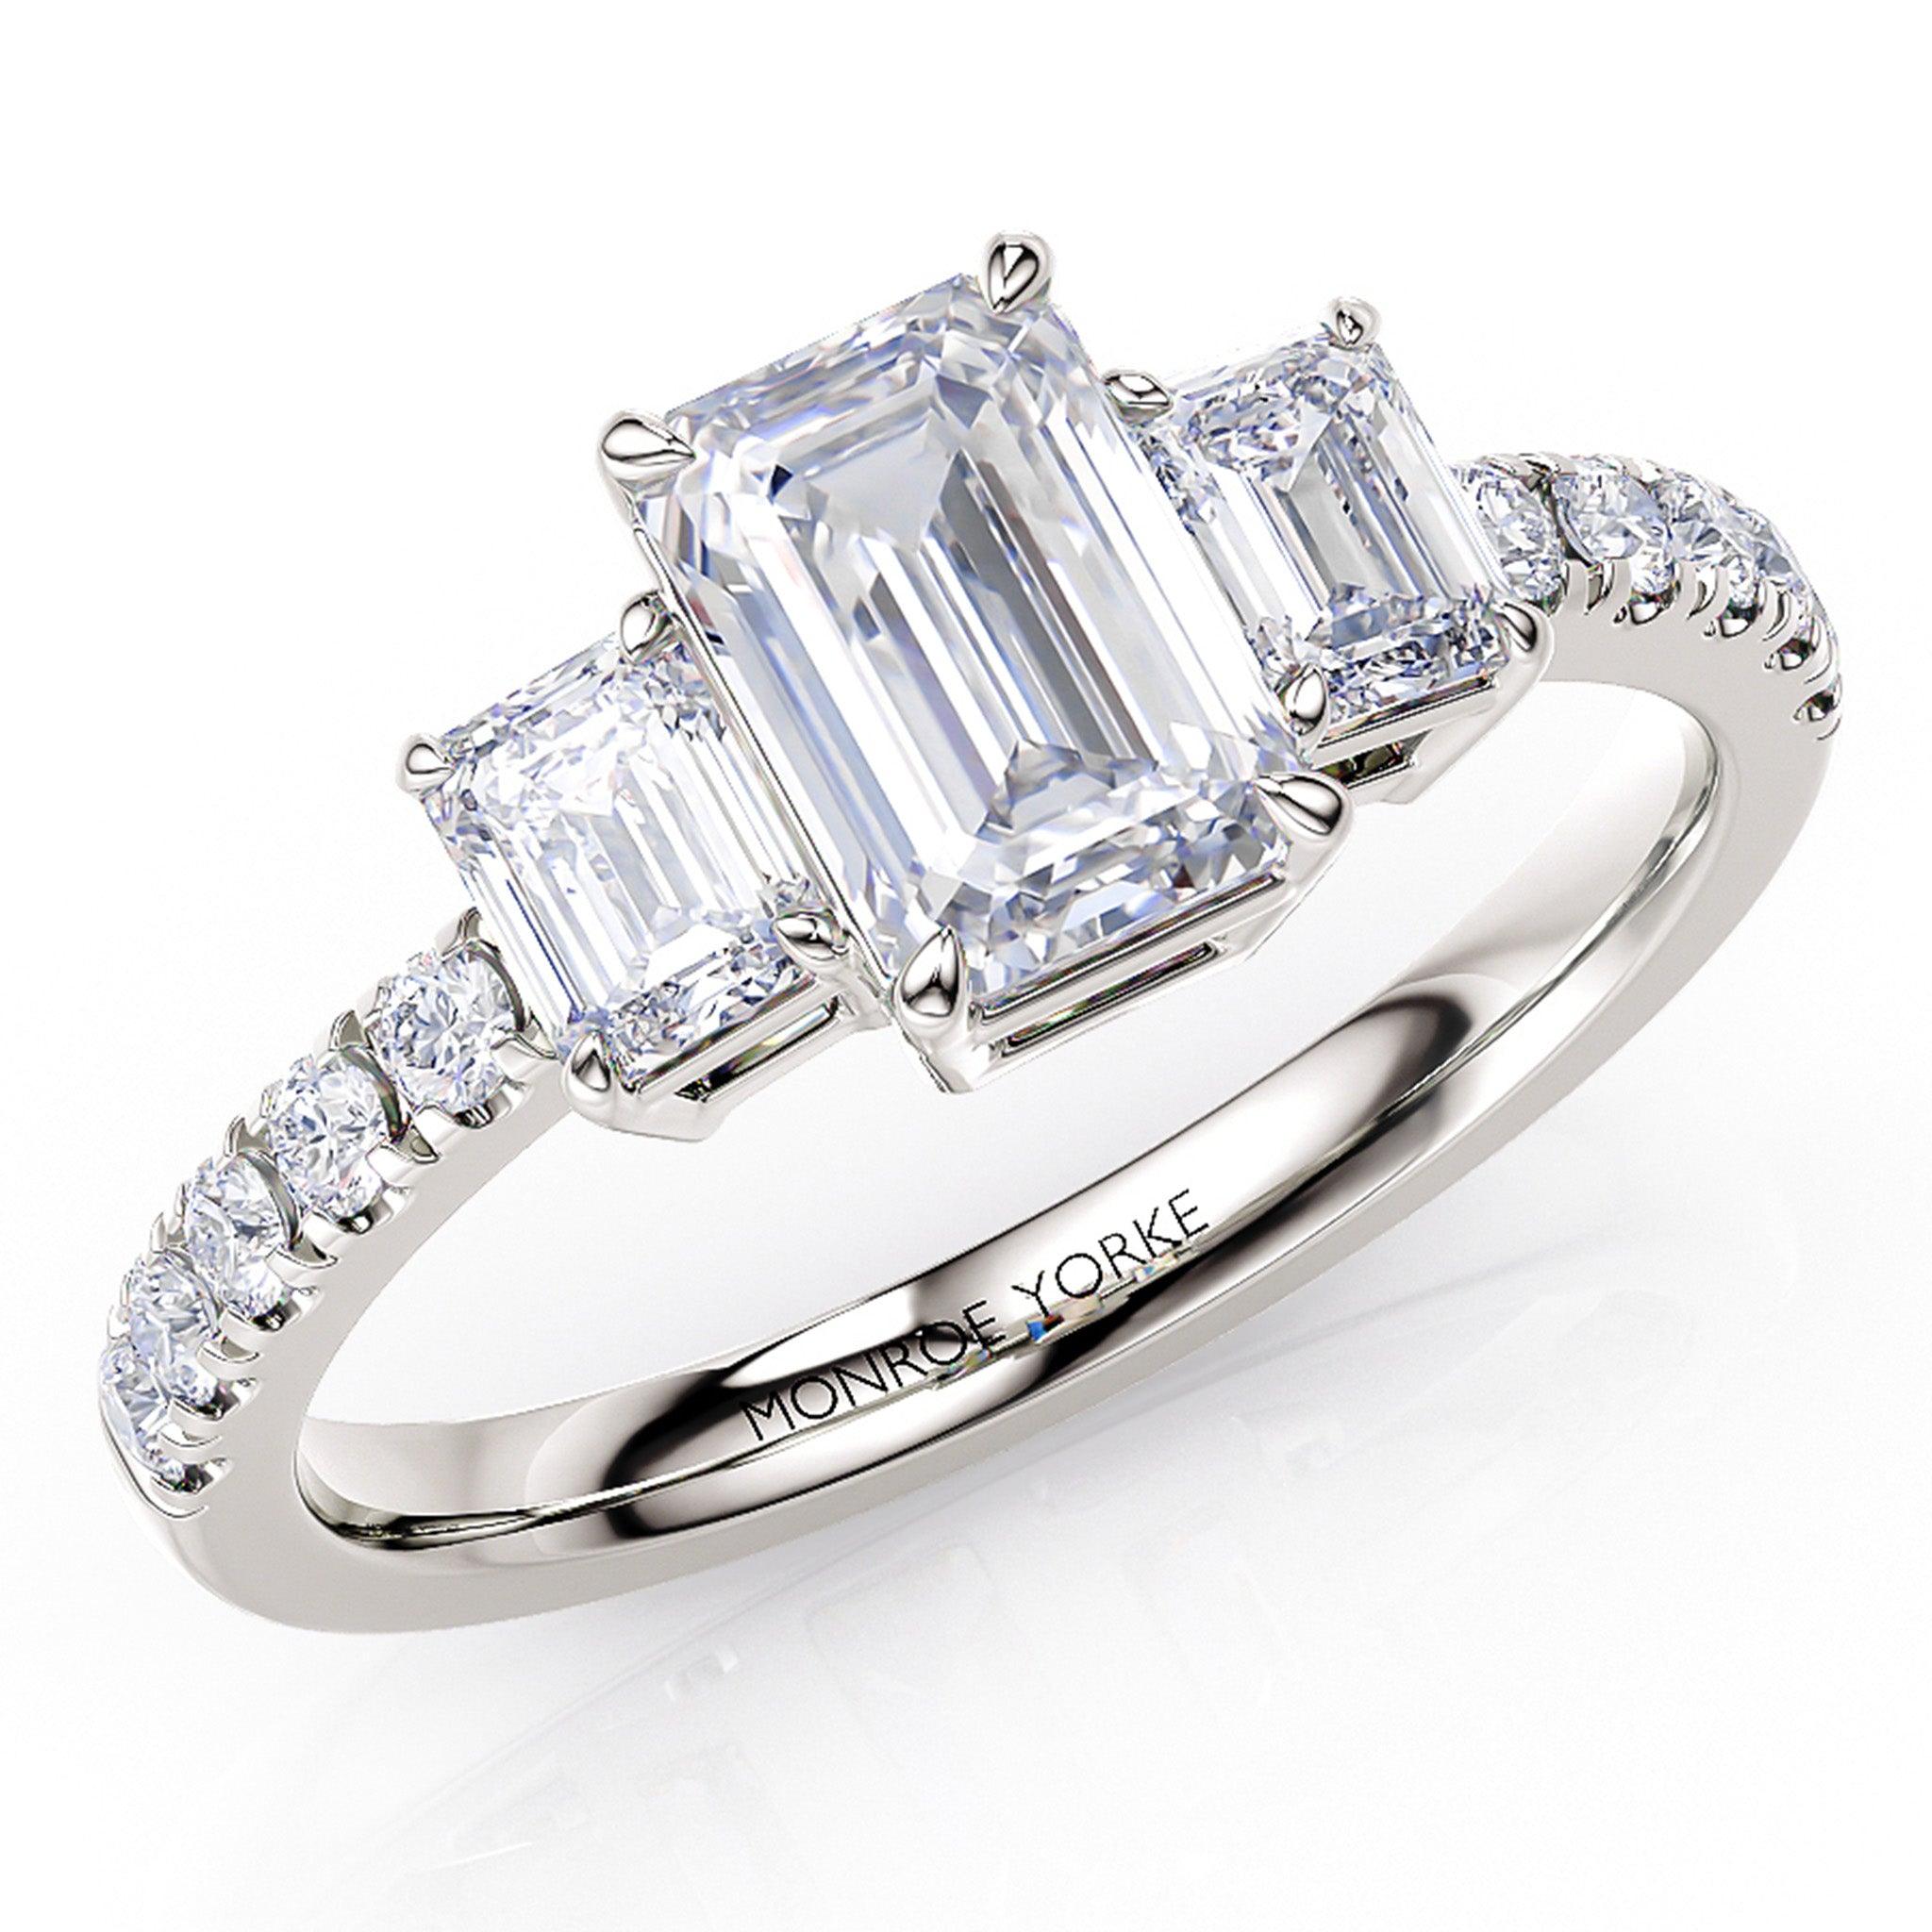 Aspen emerald cut diamond trilogy ring with diamonds on the band. 18 carat white gold.